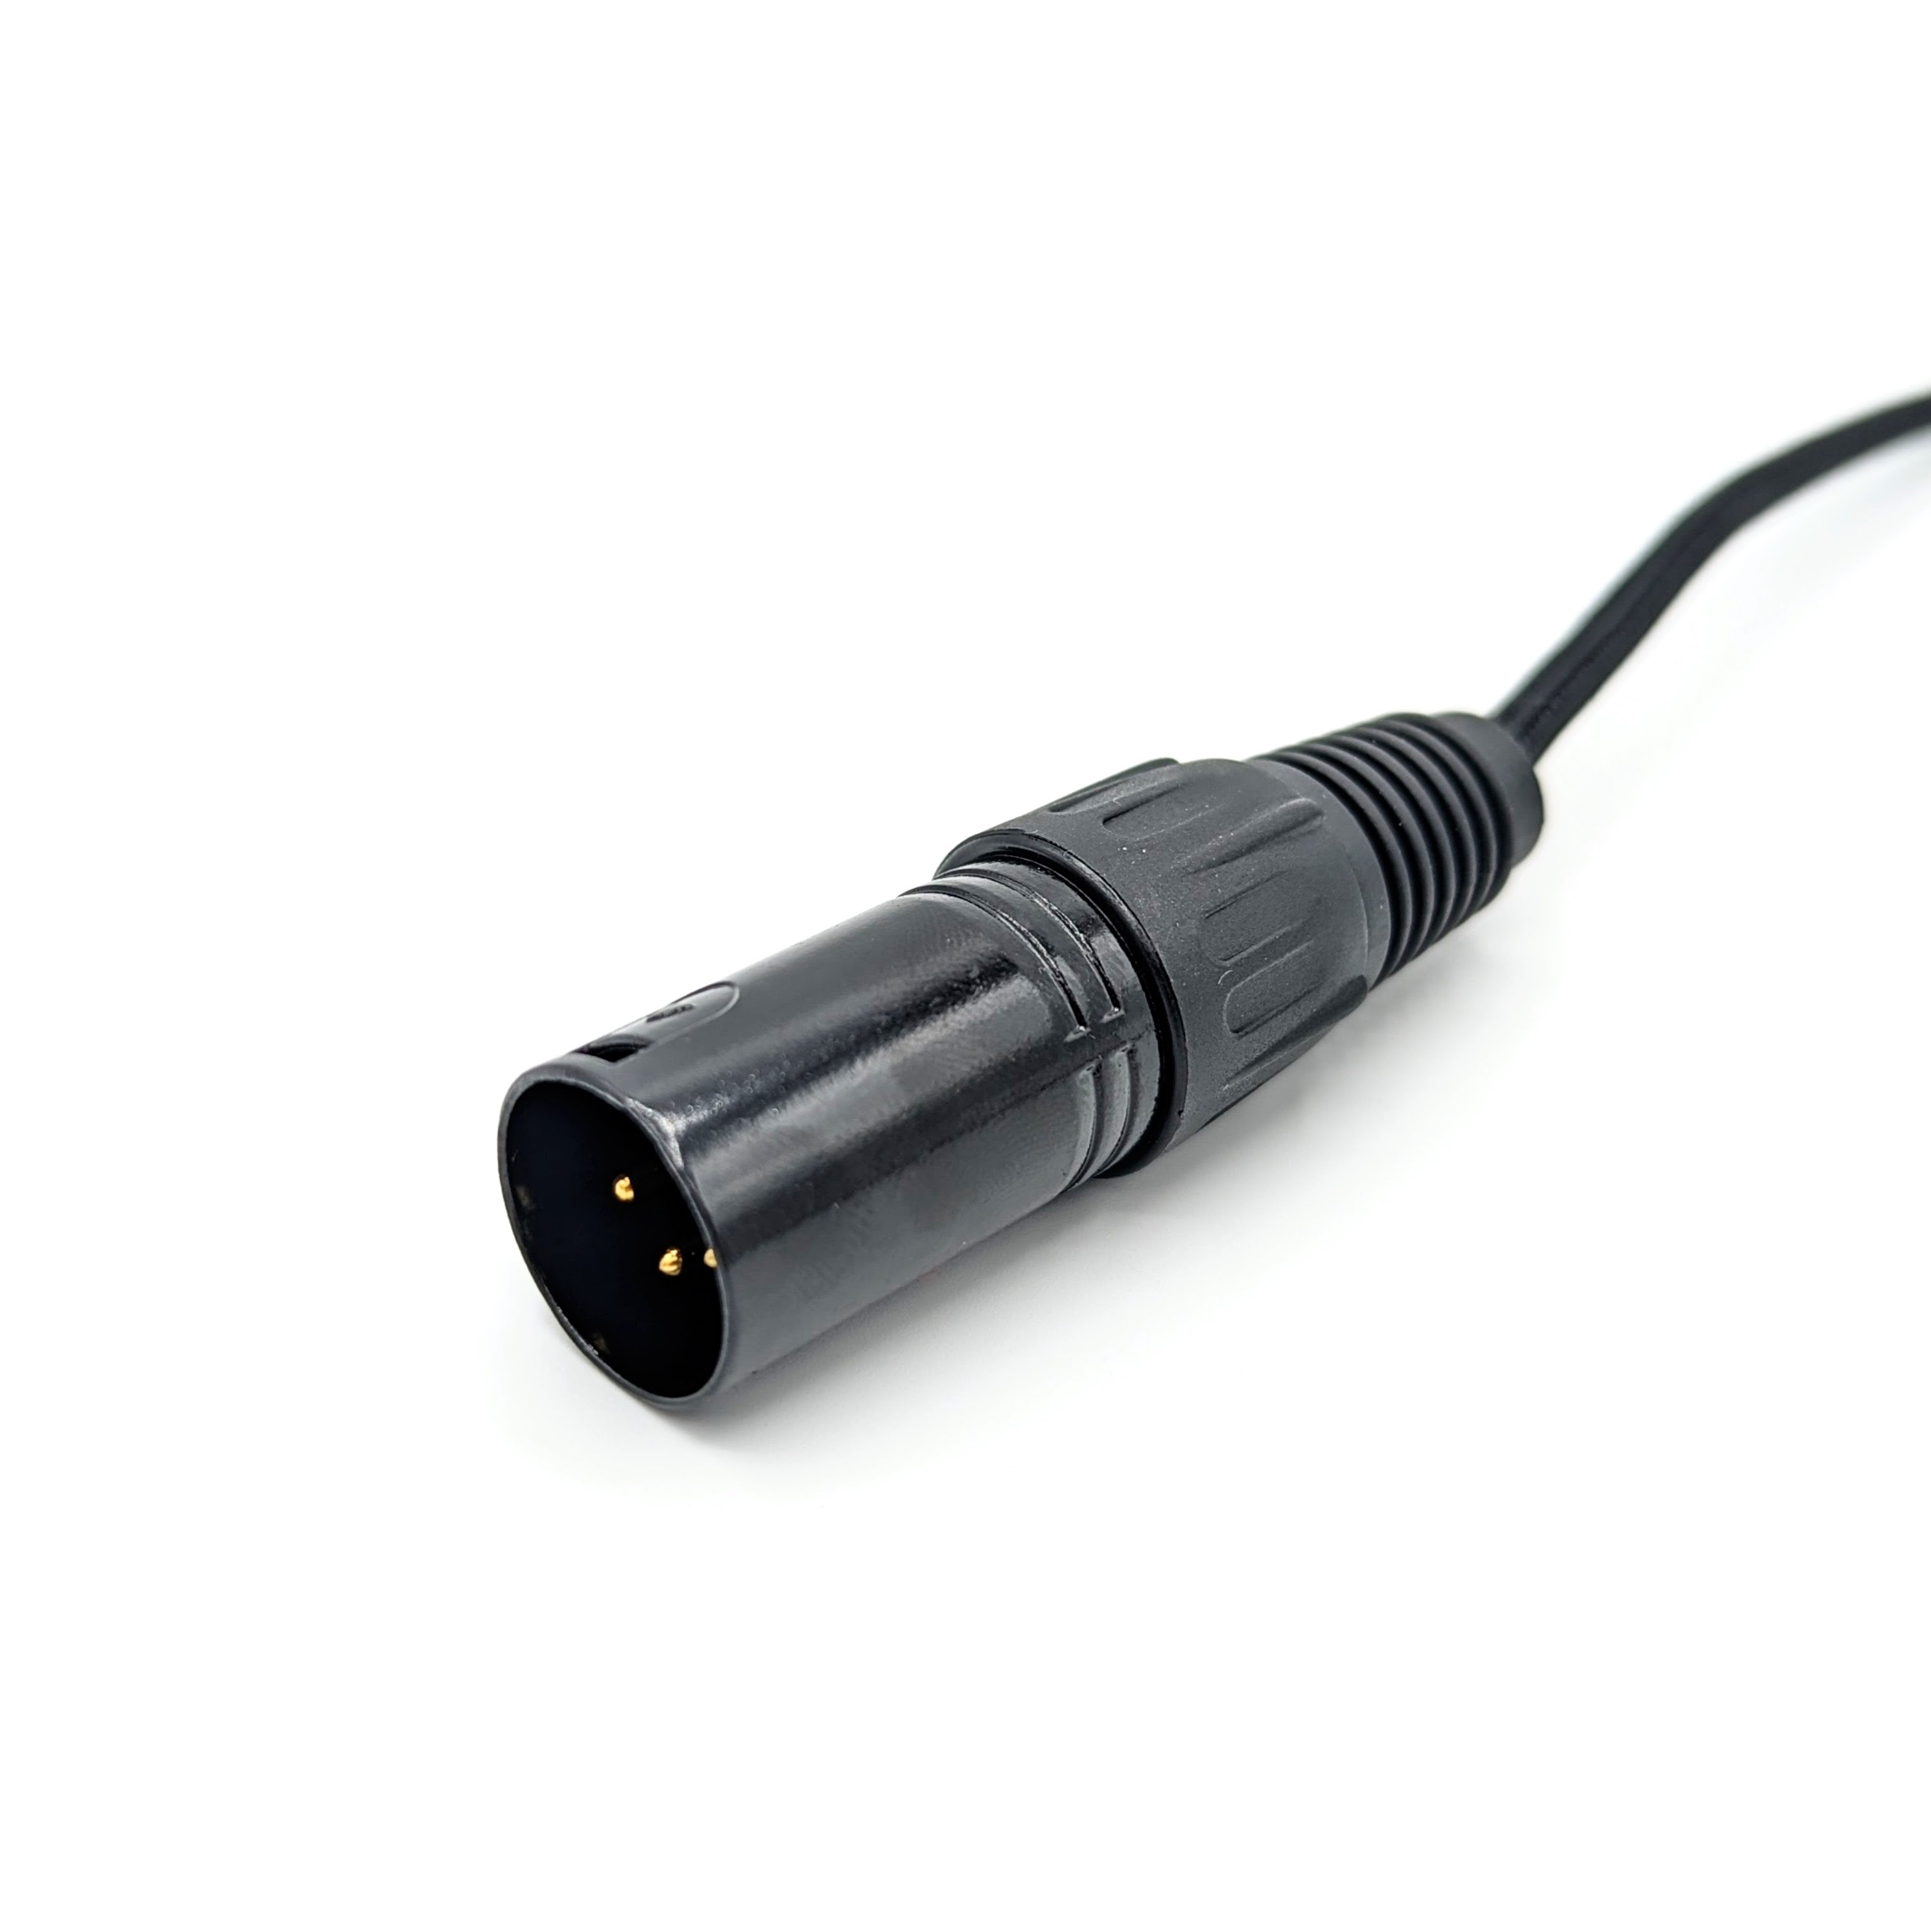 Dual Lemo 2-pin Cable for Focal Utopia